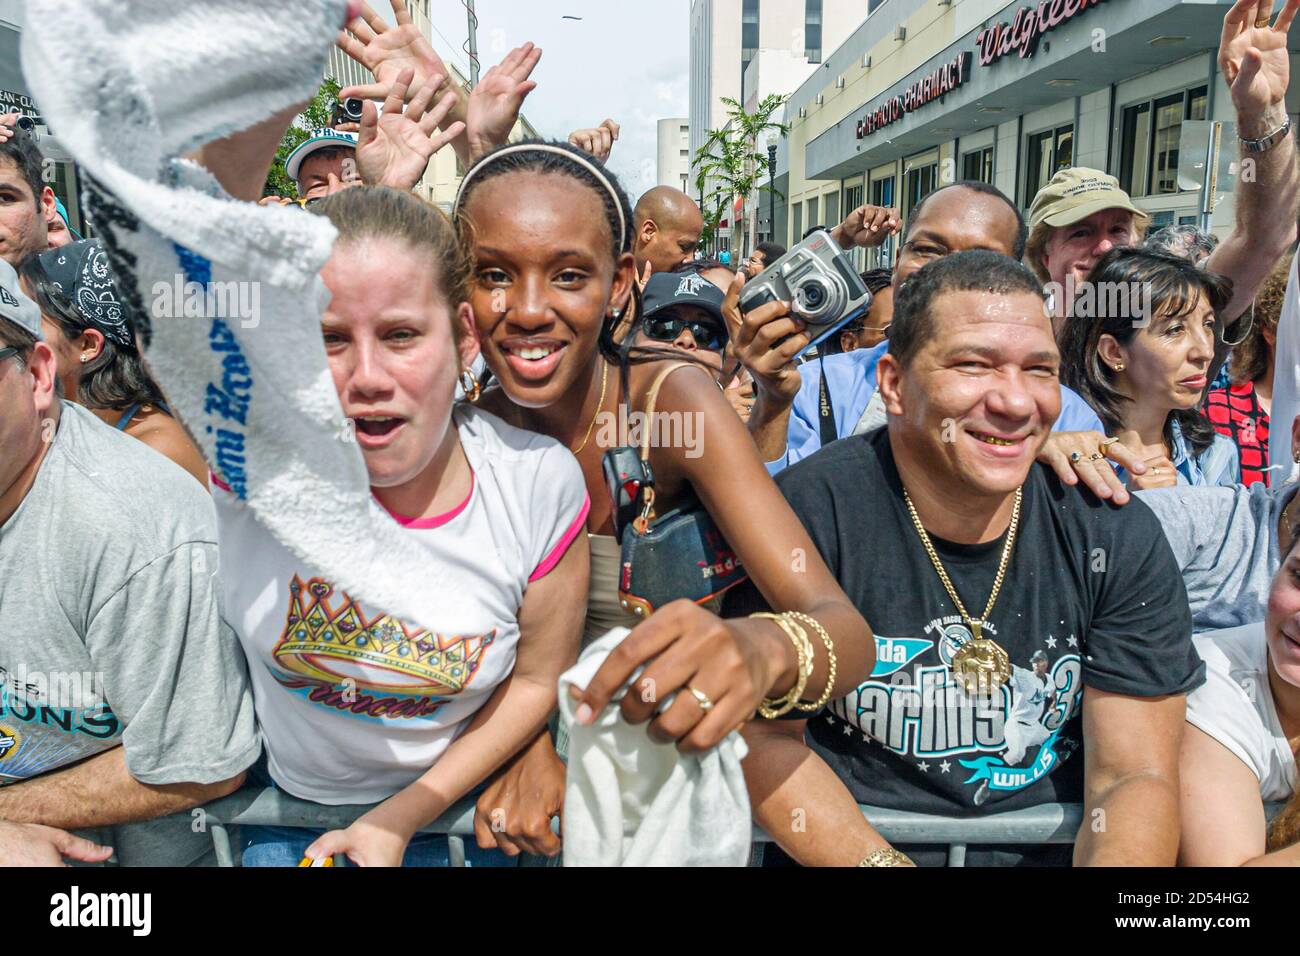 Miami Florida,Flagler Street,Marlins Major League Baseball team World Series winner,fans celebrate celebrating parade,Black African Hispanic girl girl Stock Photo